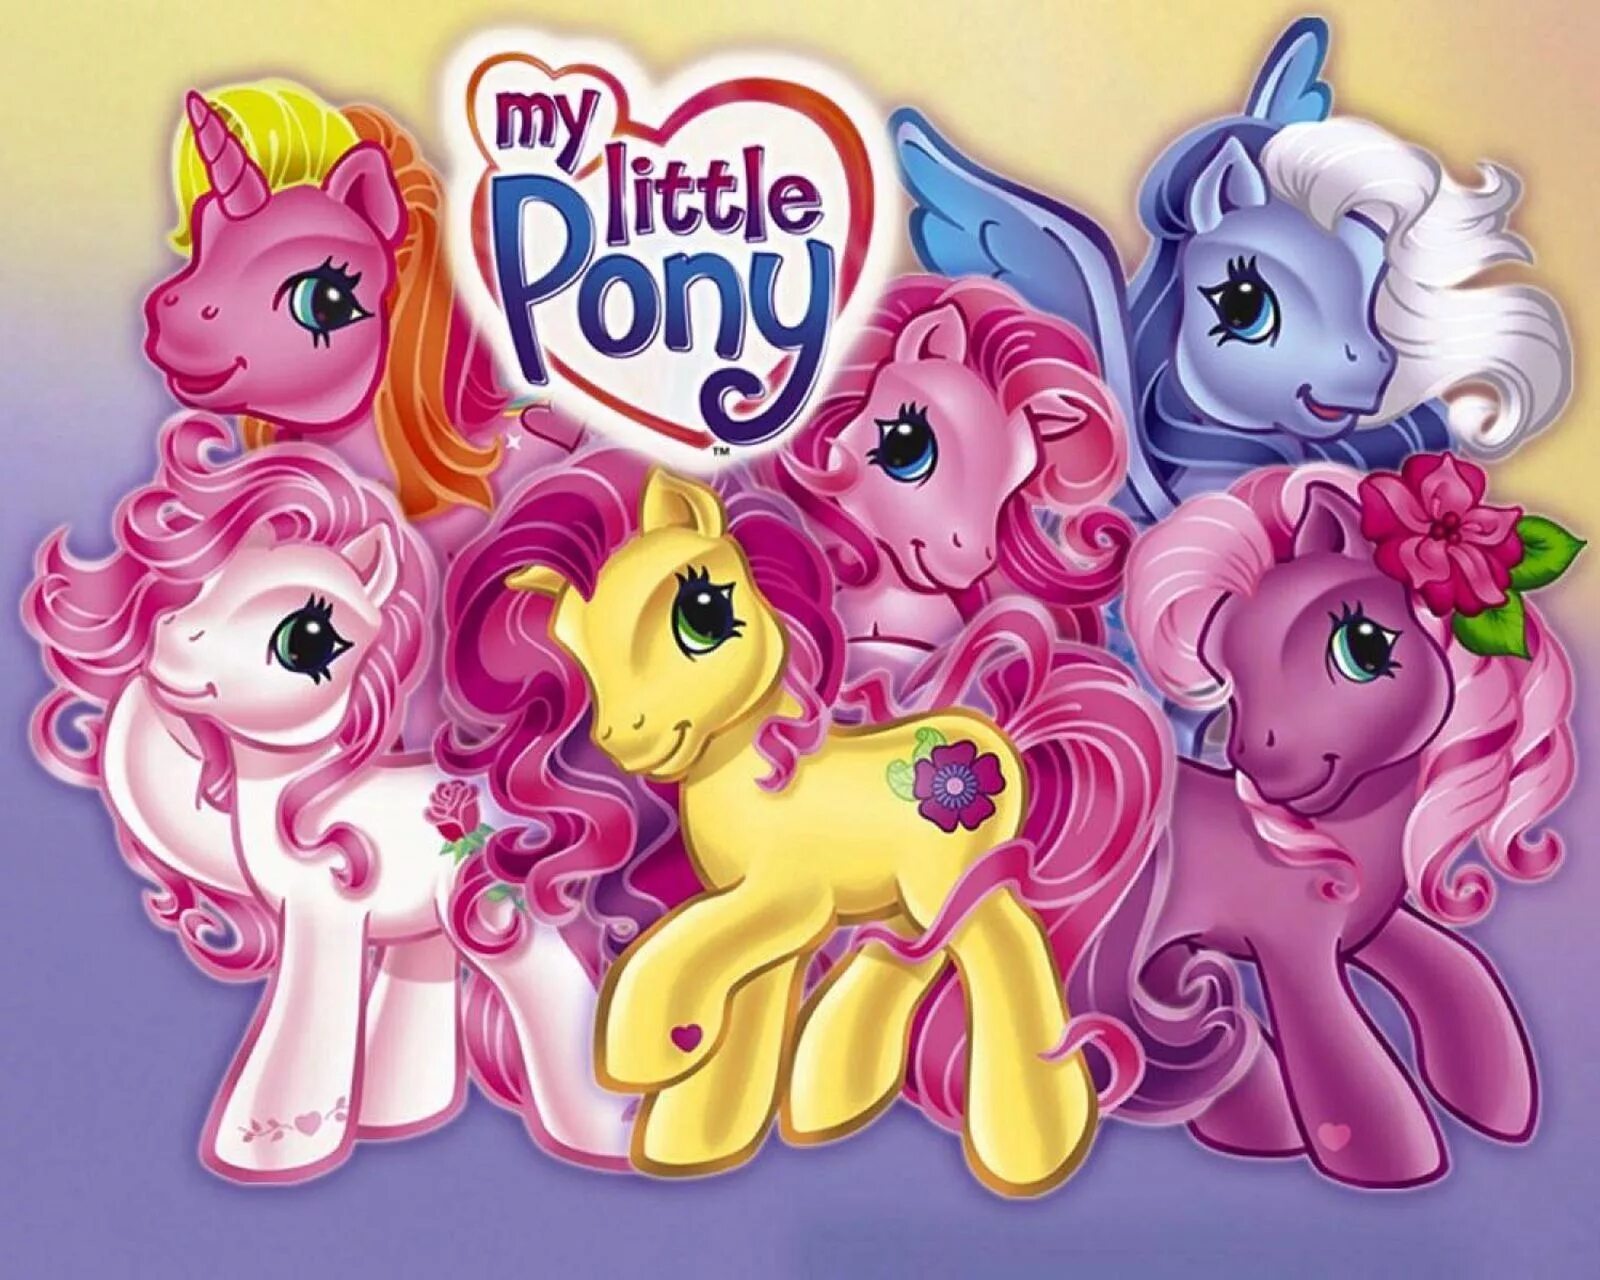 Mu pony. My little Pony g3. My little Pony Ponyville g3 игрушки.